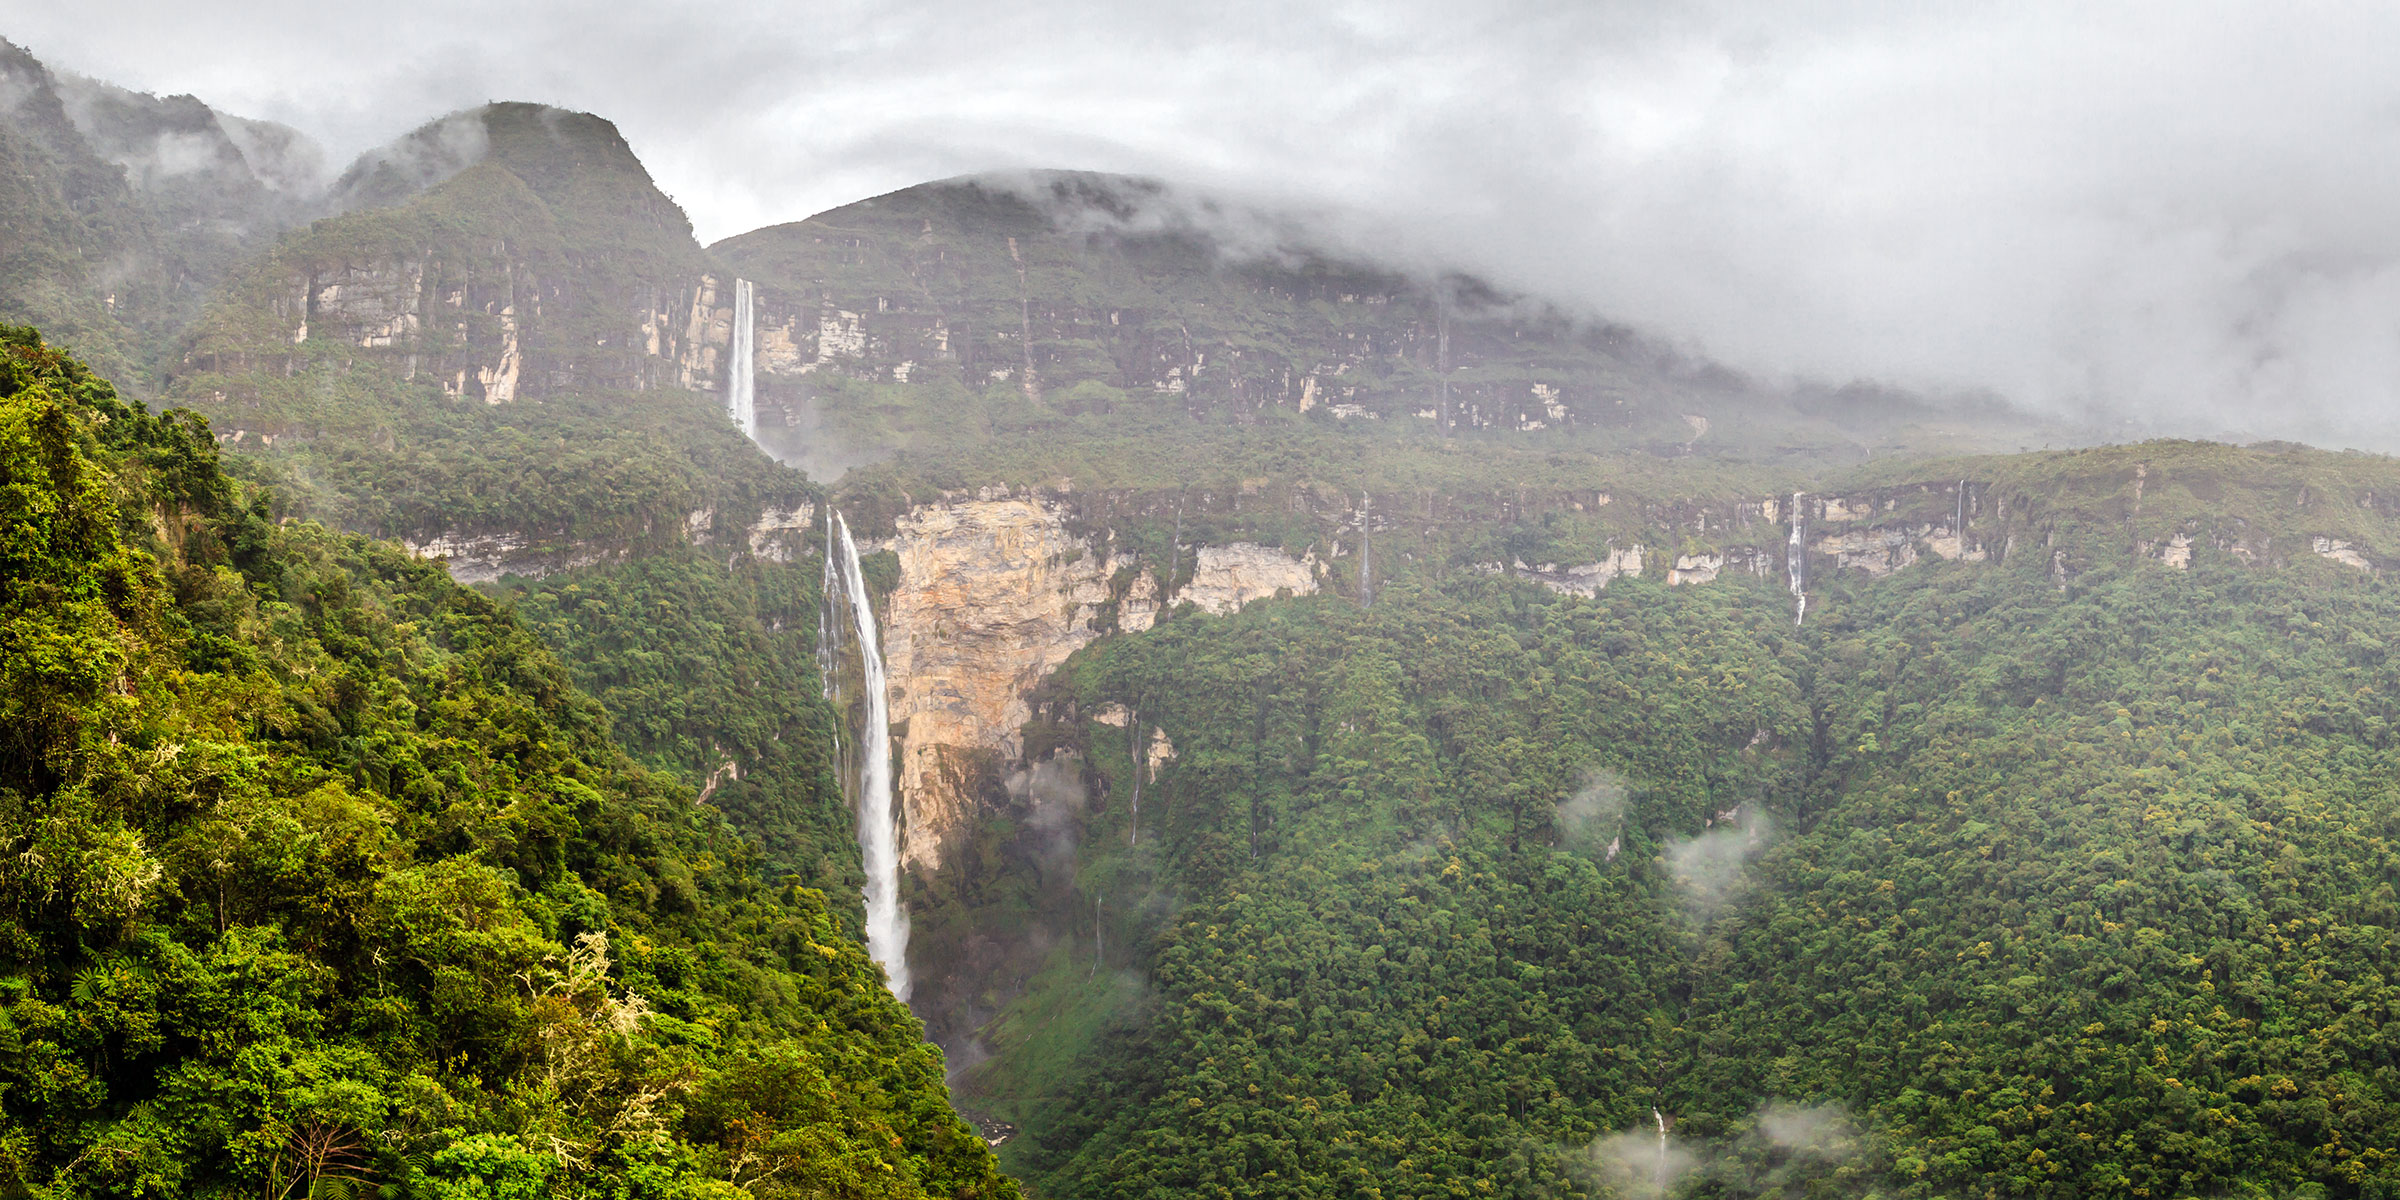 Misty mountains surrounding Gocta waterfall in the Peruvian Amazon